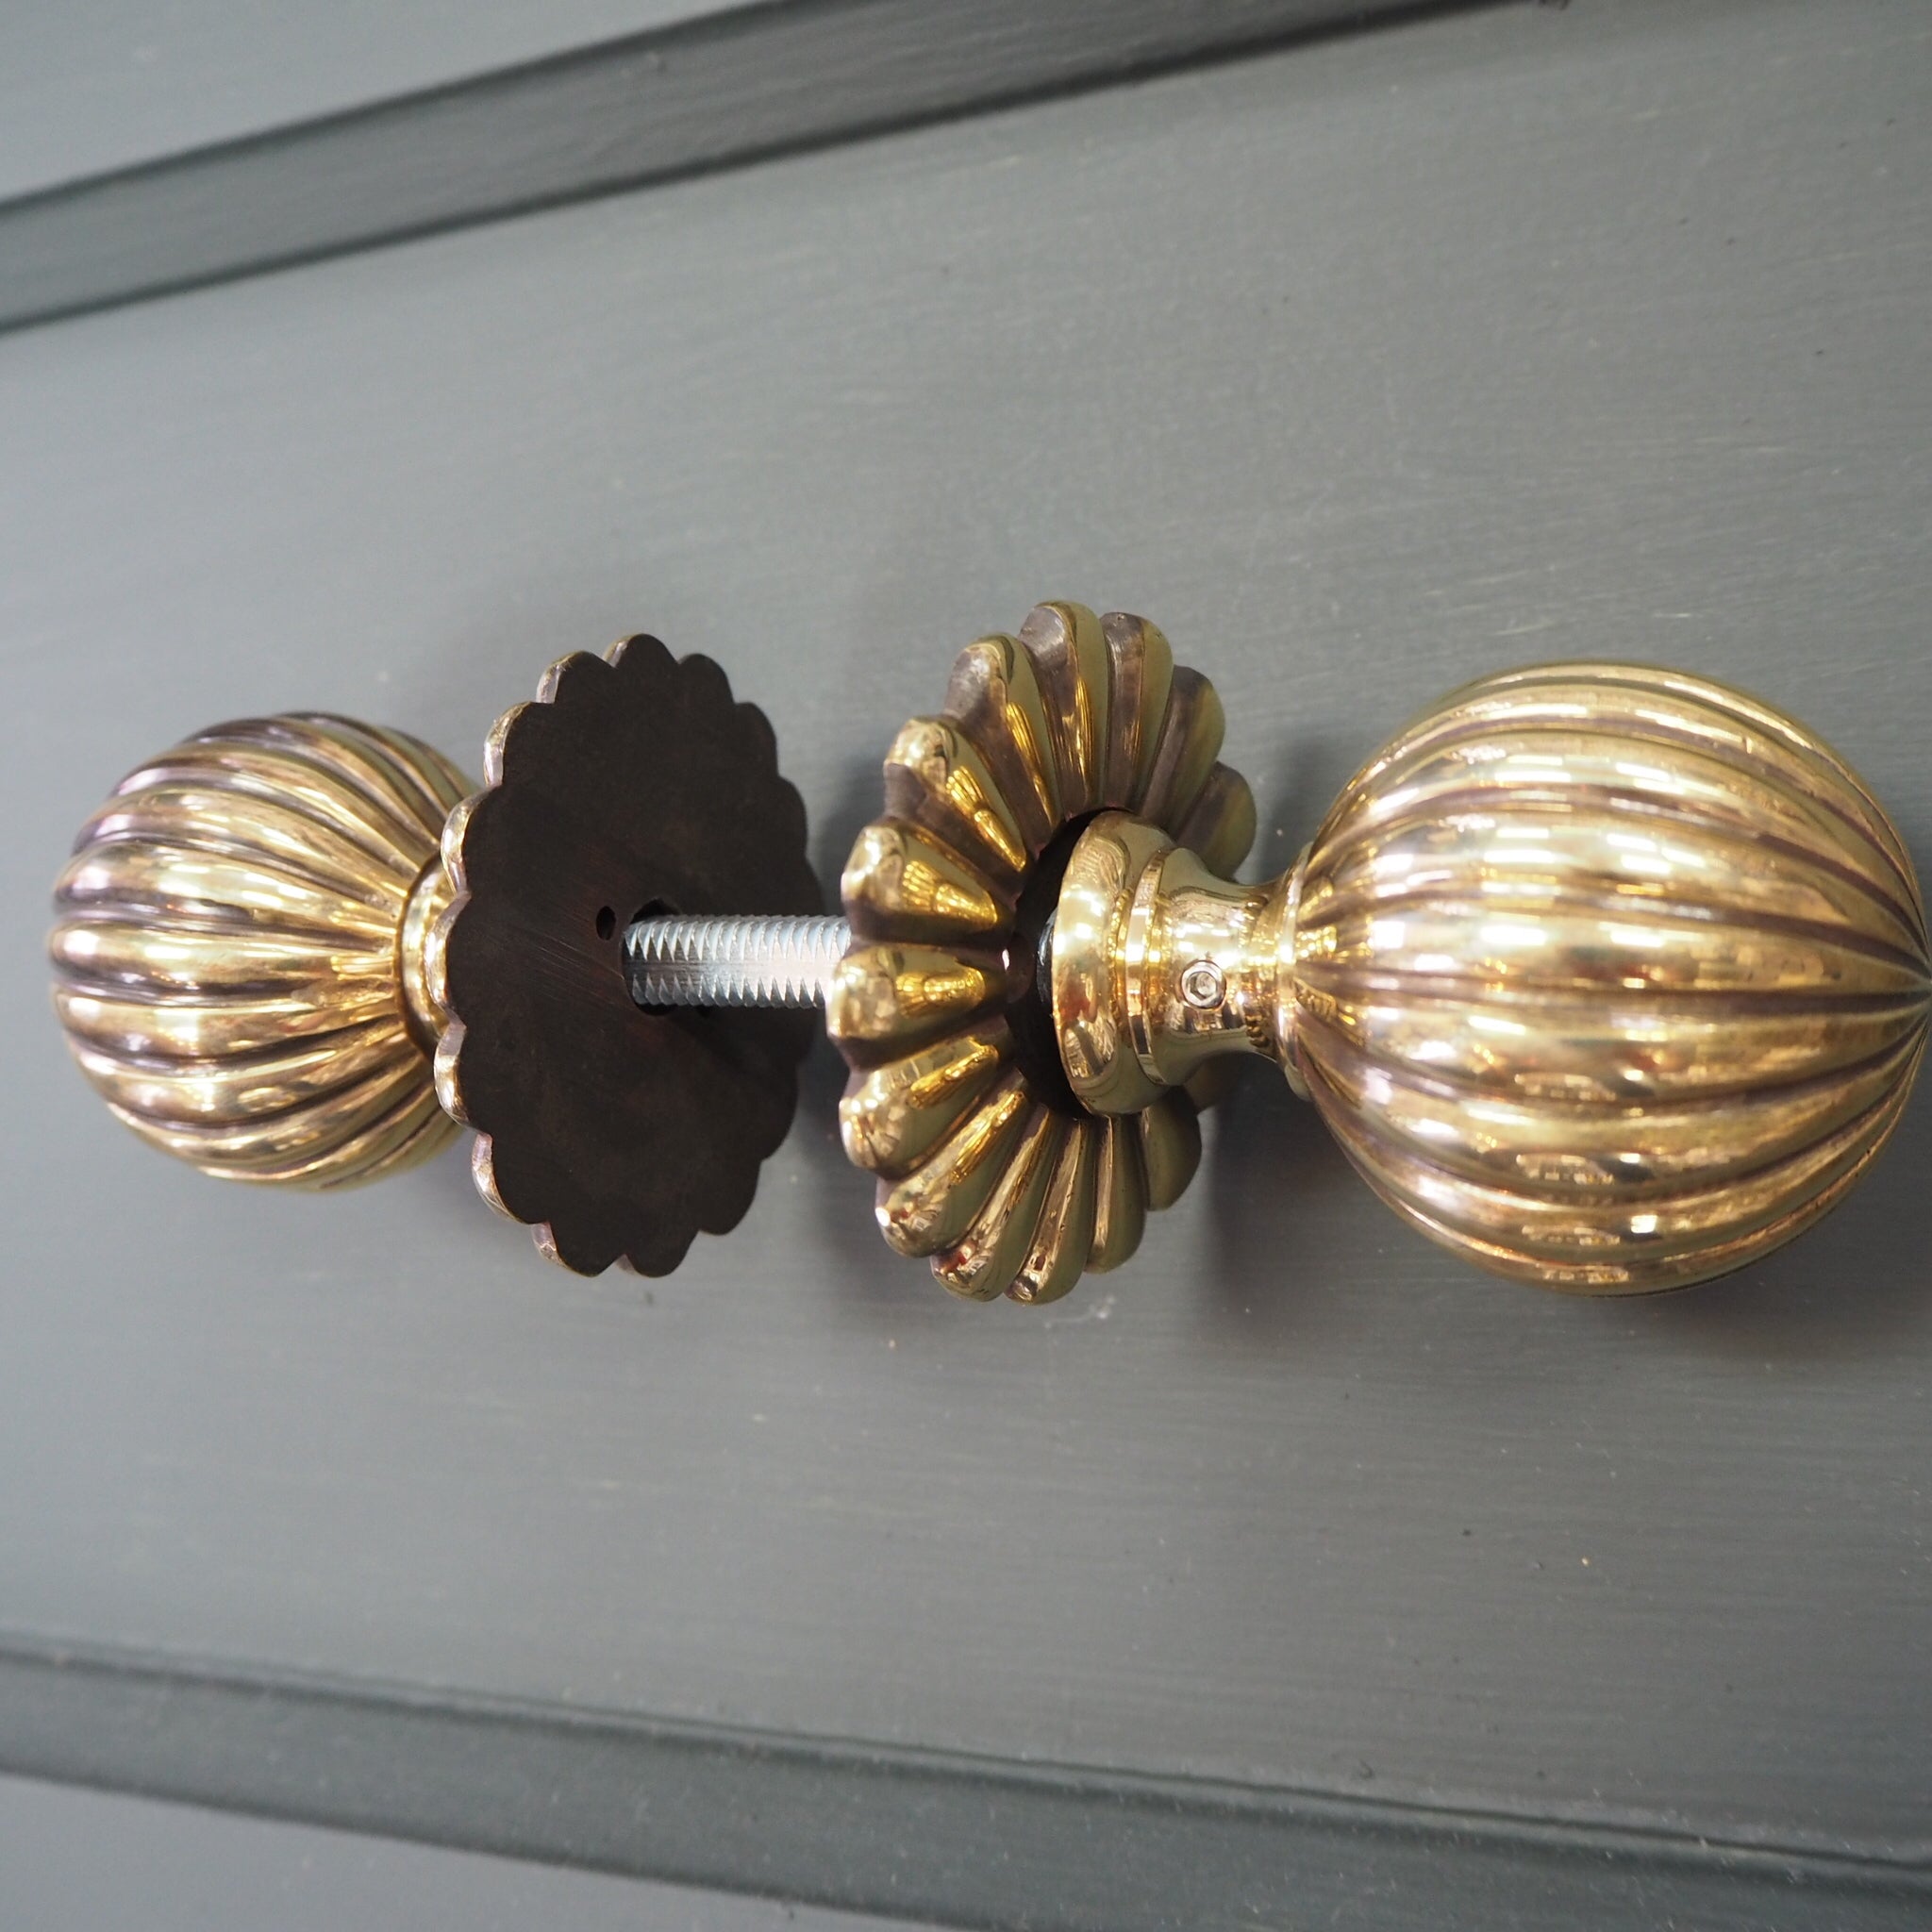 Aged brass flower mortice knob